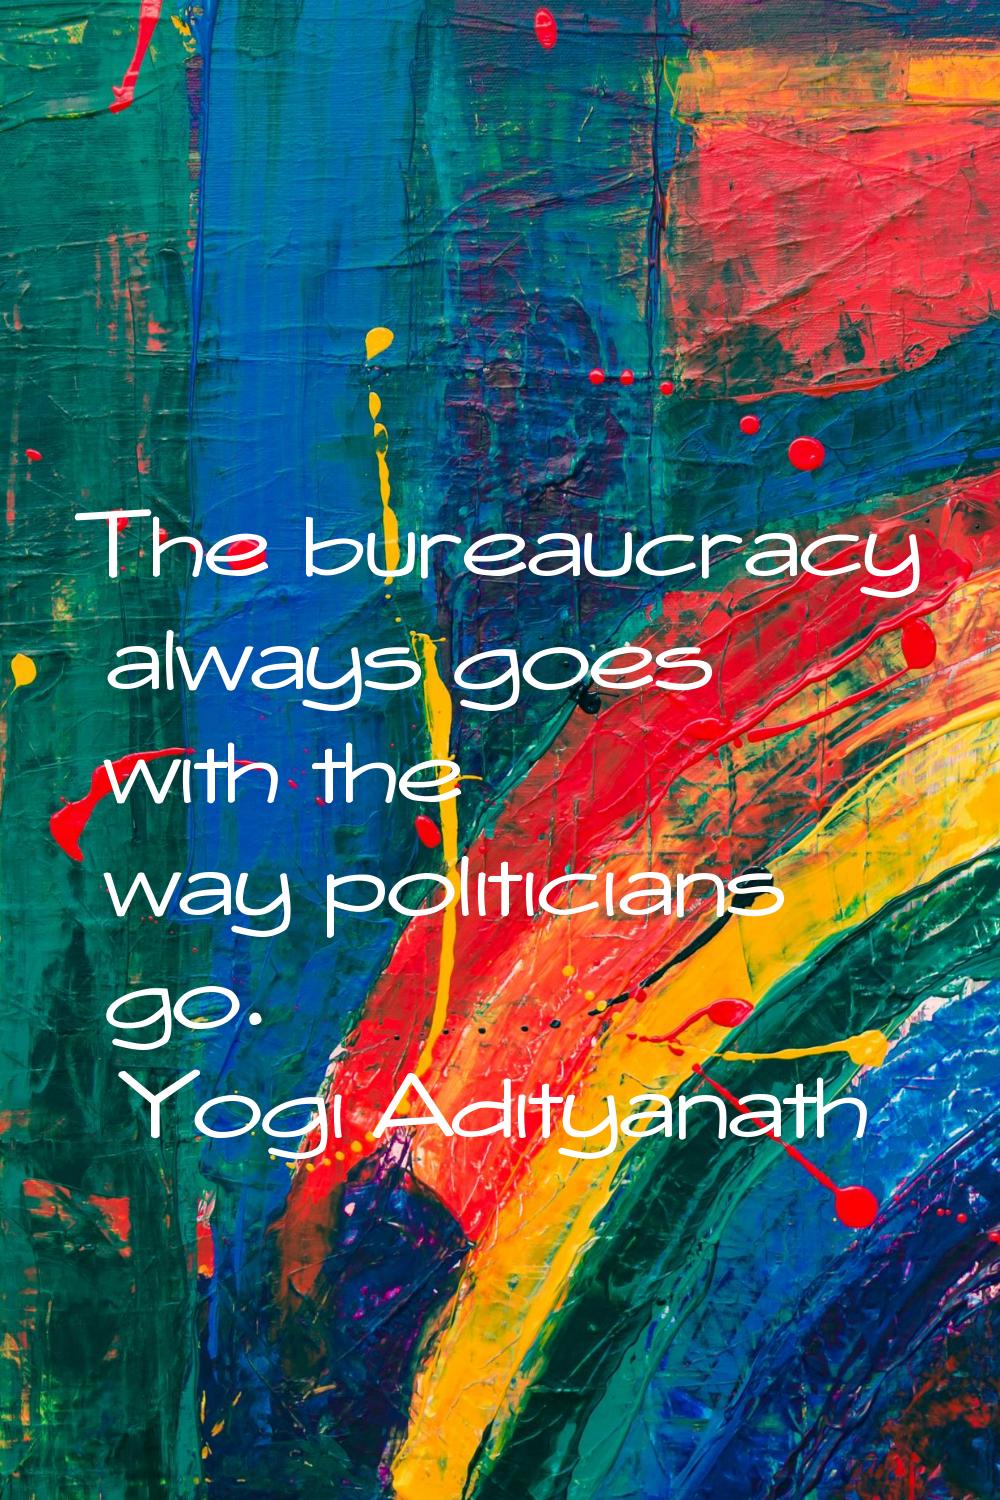 The bureaucracy always goes with the way politicians go.